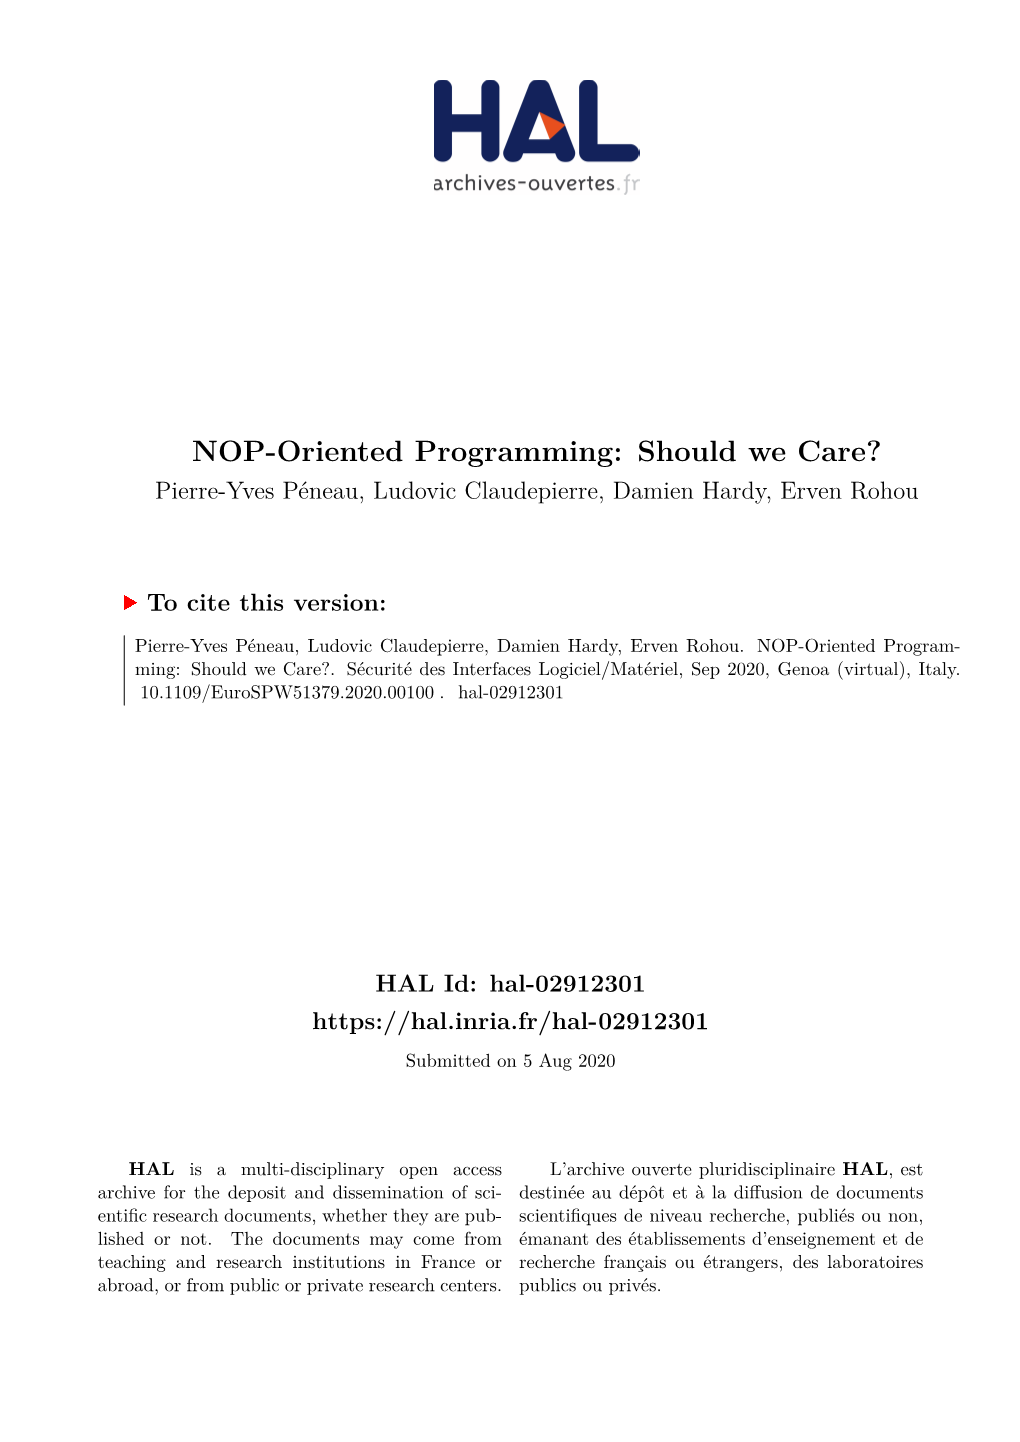 NOP-Oriented Programming: Should We Care? Pierre-Yves Péneau, Ludovic Claudepierre, Damien Hardy, Erven Rohou